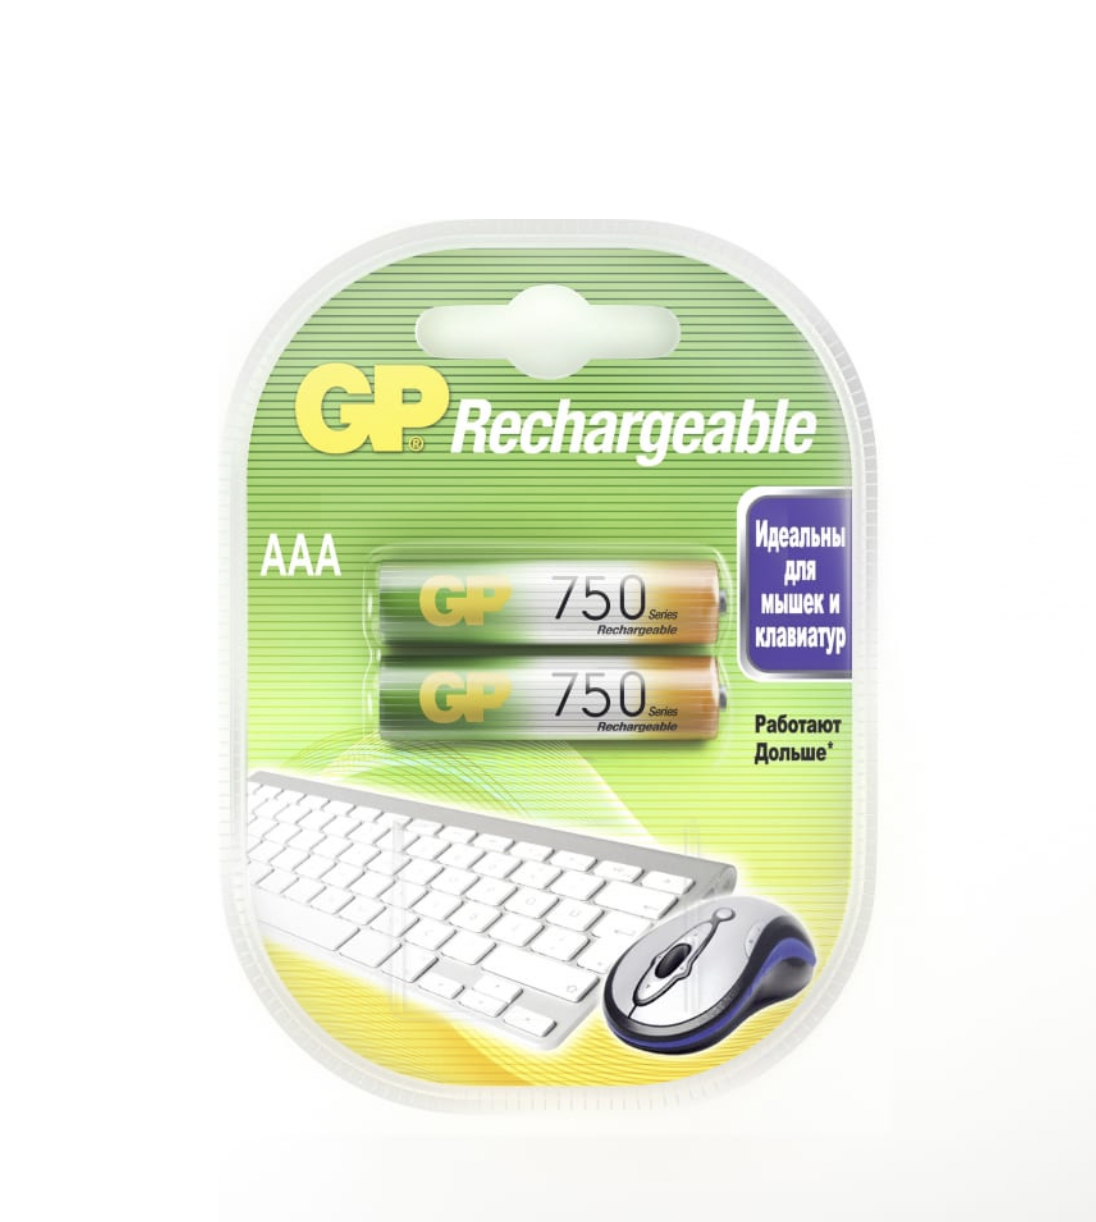  GP -  Rechargeable AAA 750 / 75AAAHC 2 